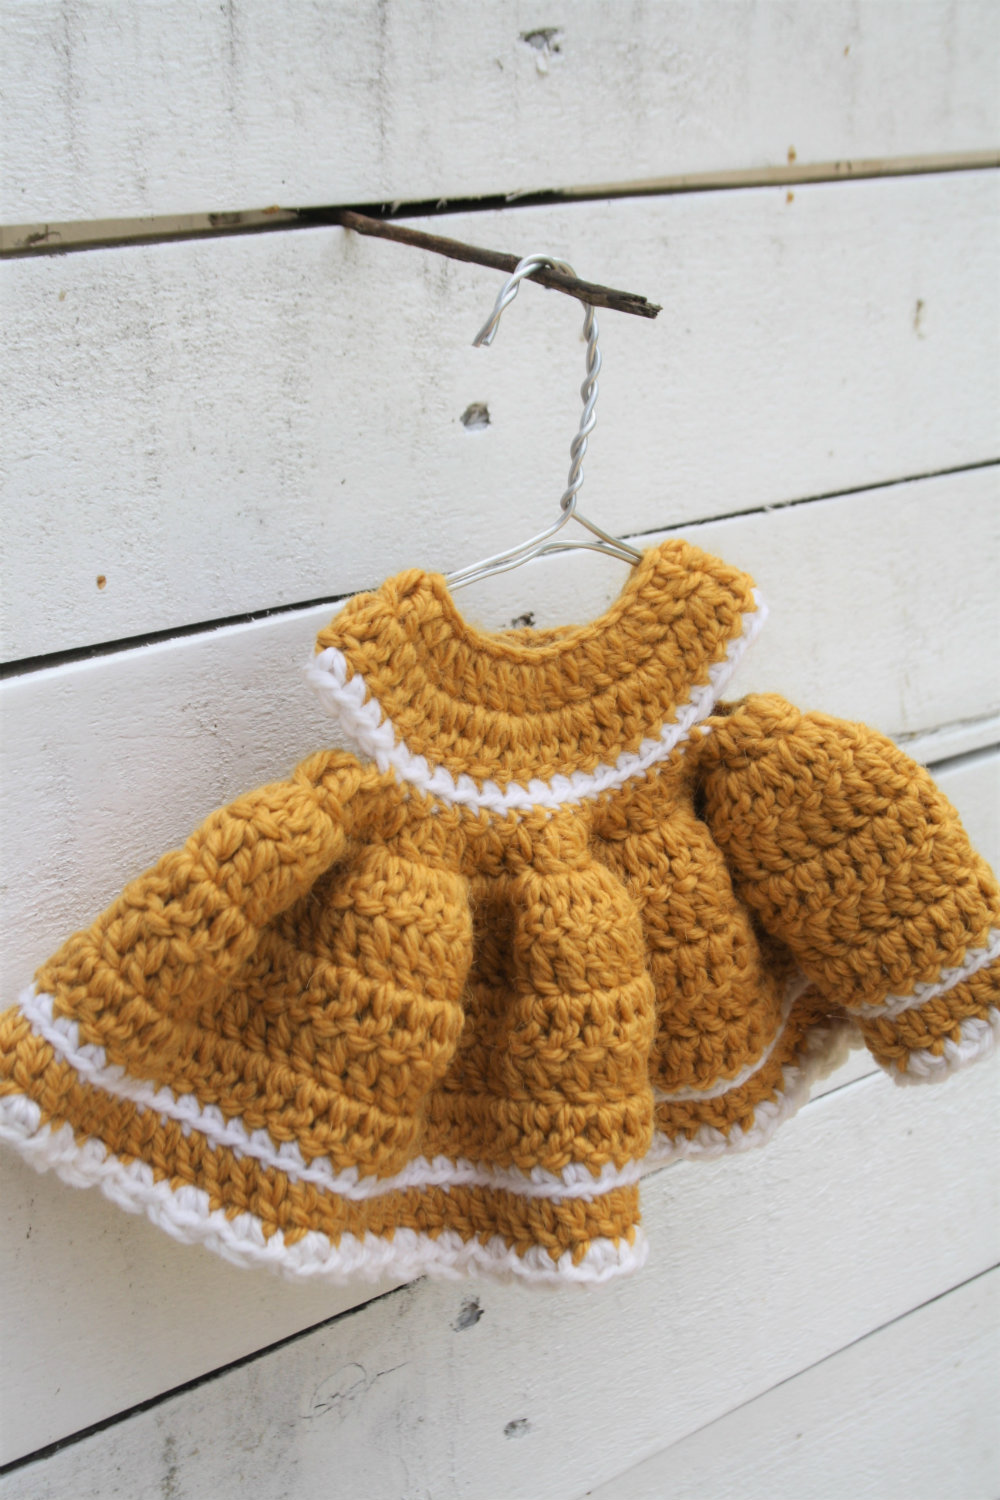 Crochet dress pattern  Crochet dress for amigurumi doll or animal